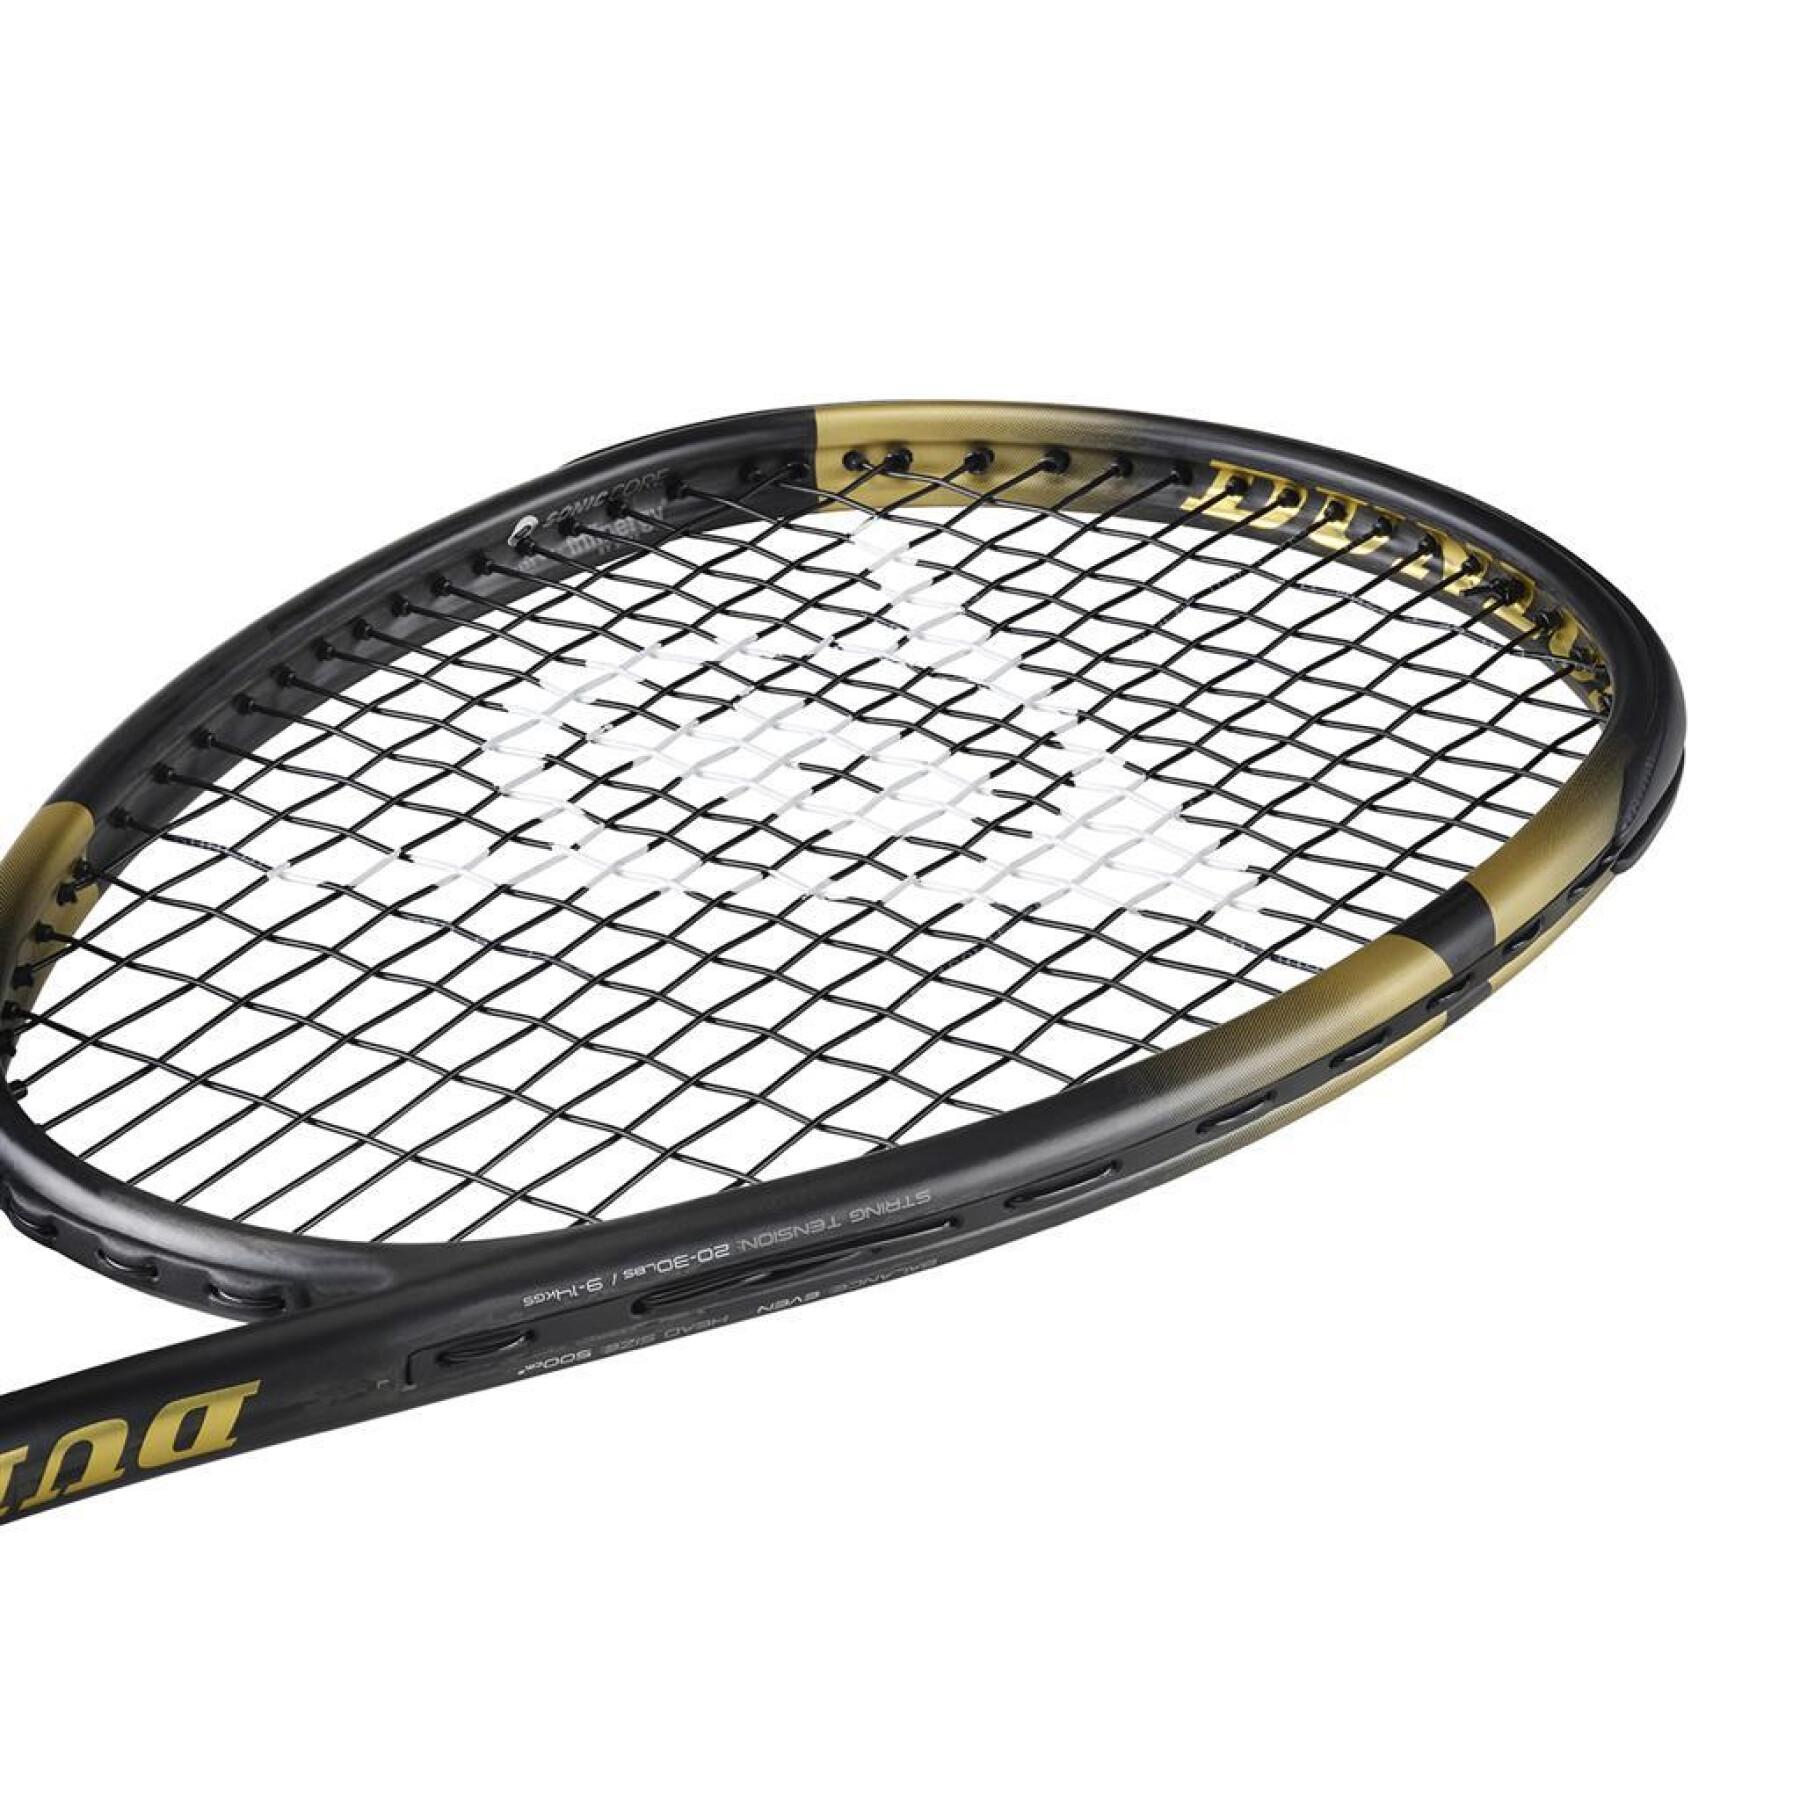 Raqueta de squash Dunlop Soniccore Iconic 130